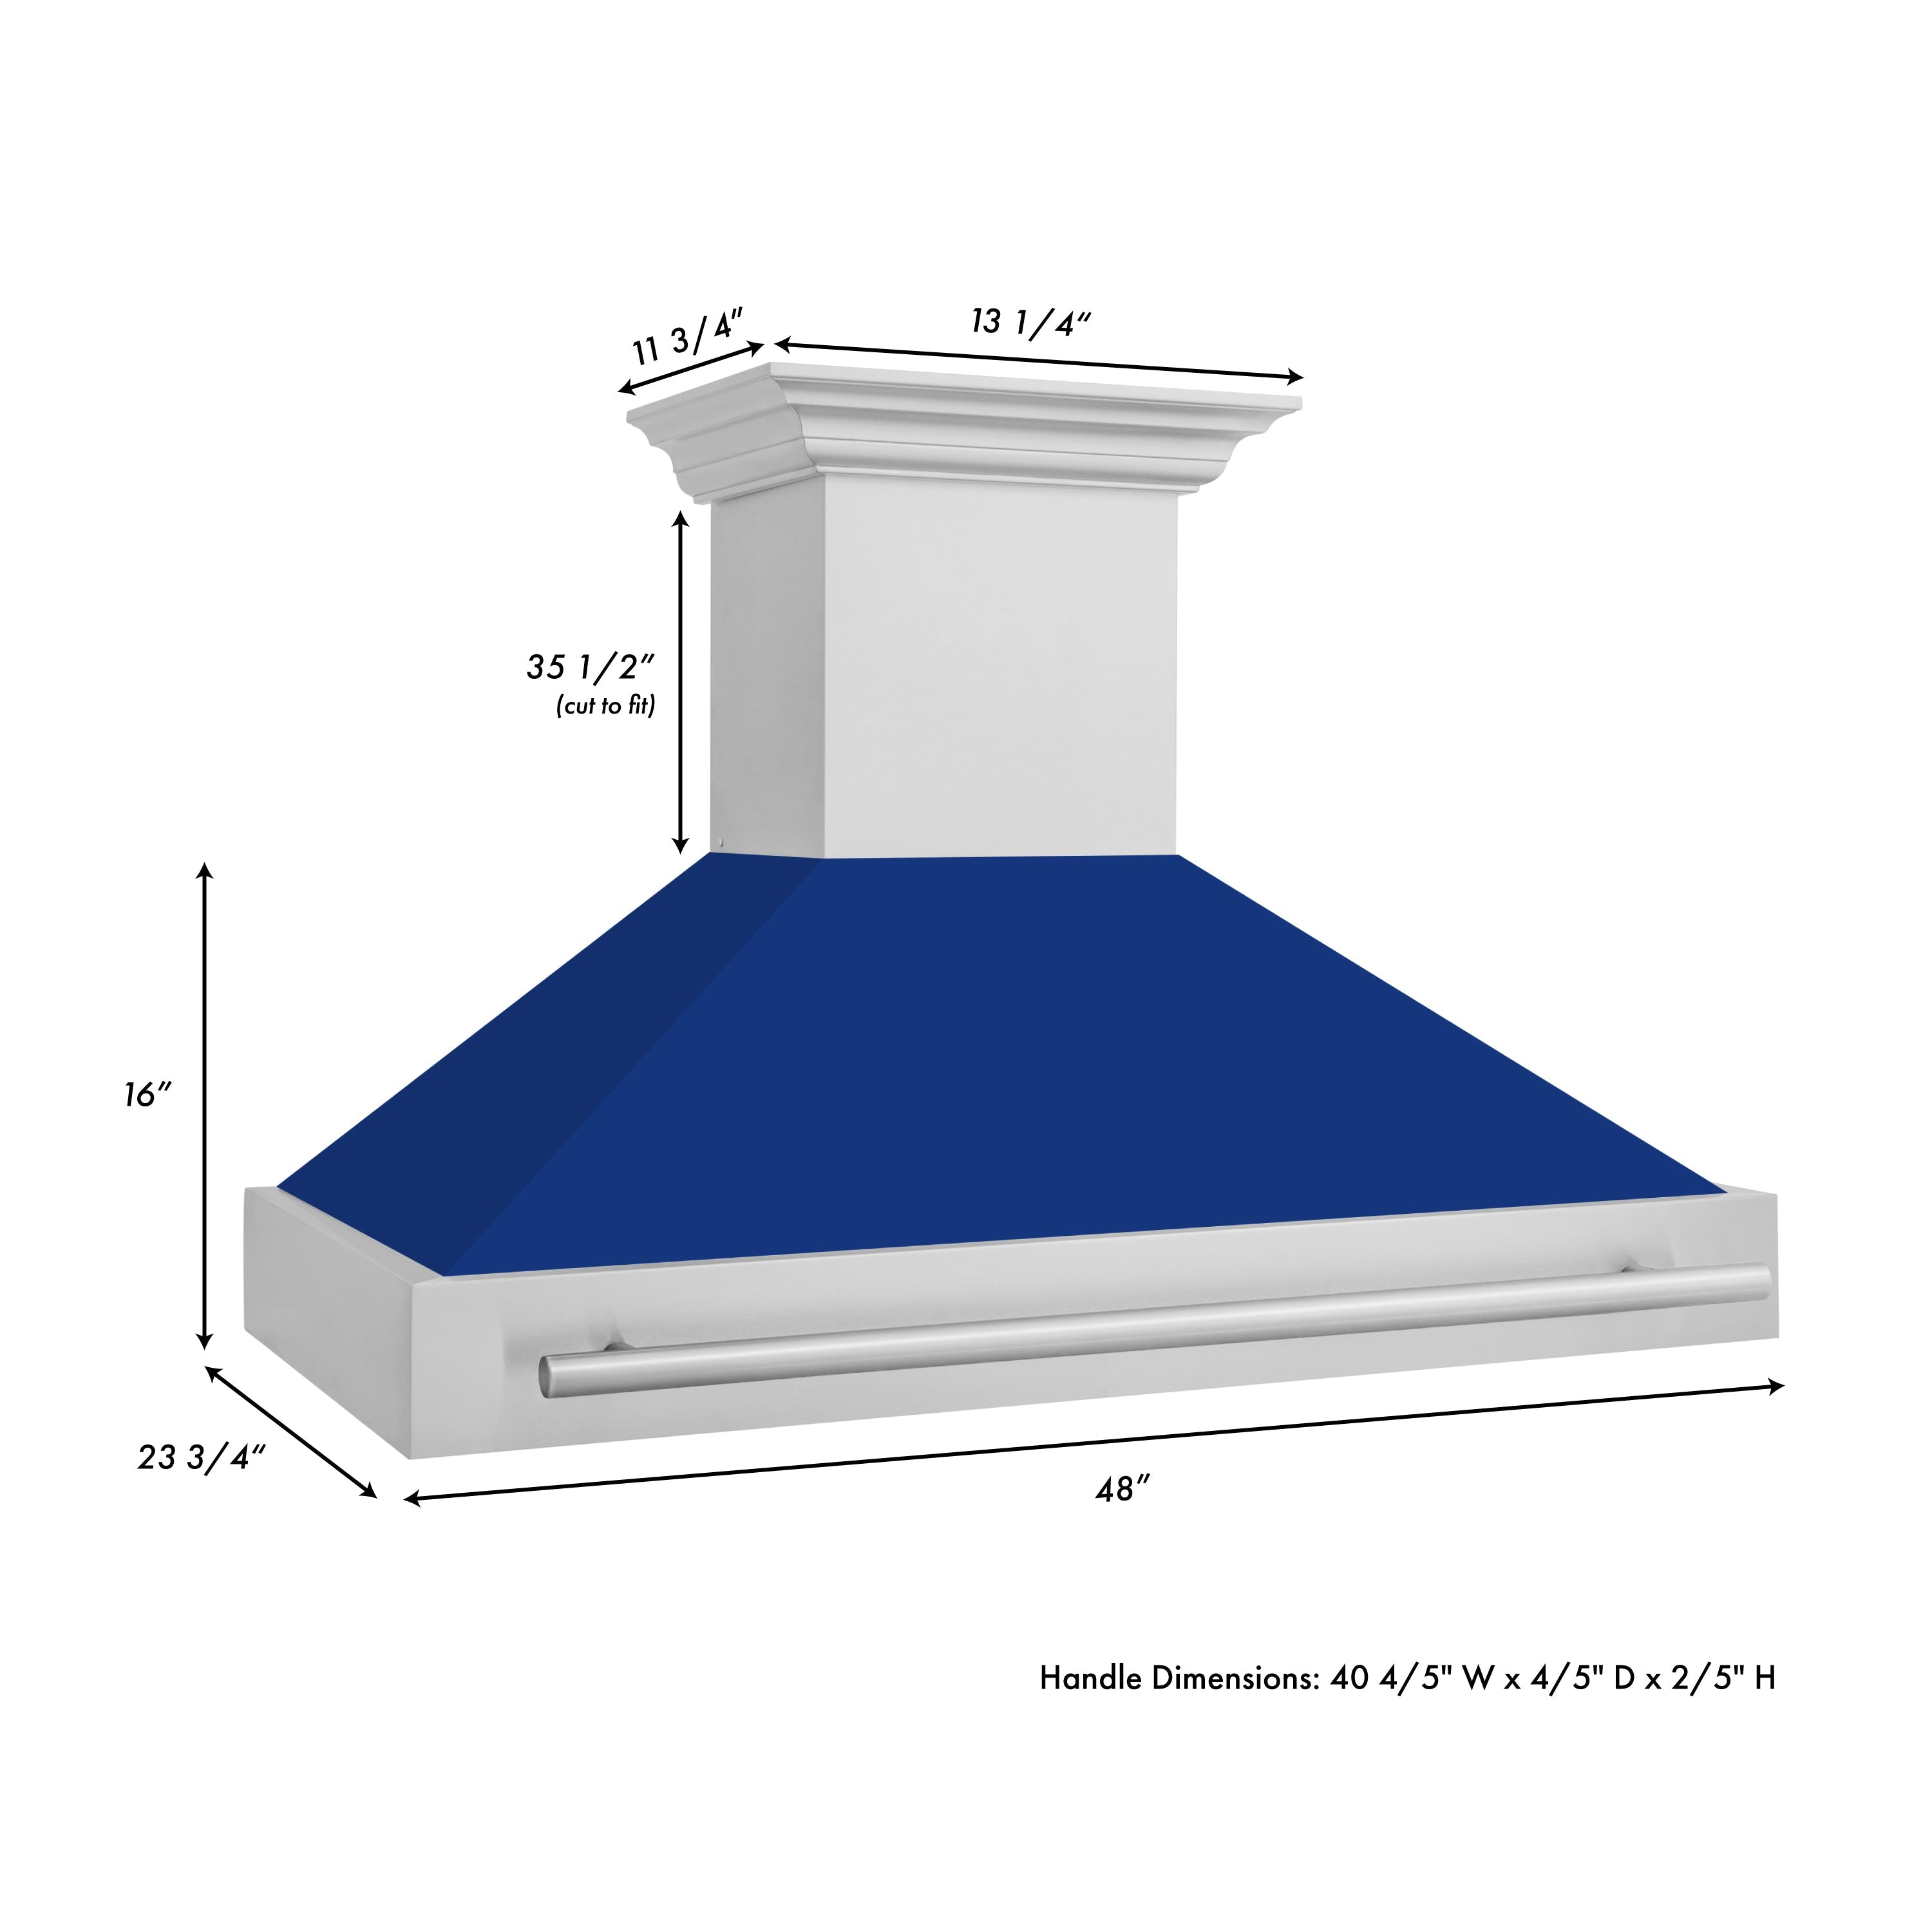 ZLINE 48 in. Fingerprint Resistant Stainless Steel Range Hood with Blue Gloss shell dimensions.